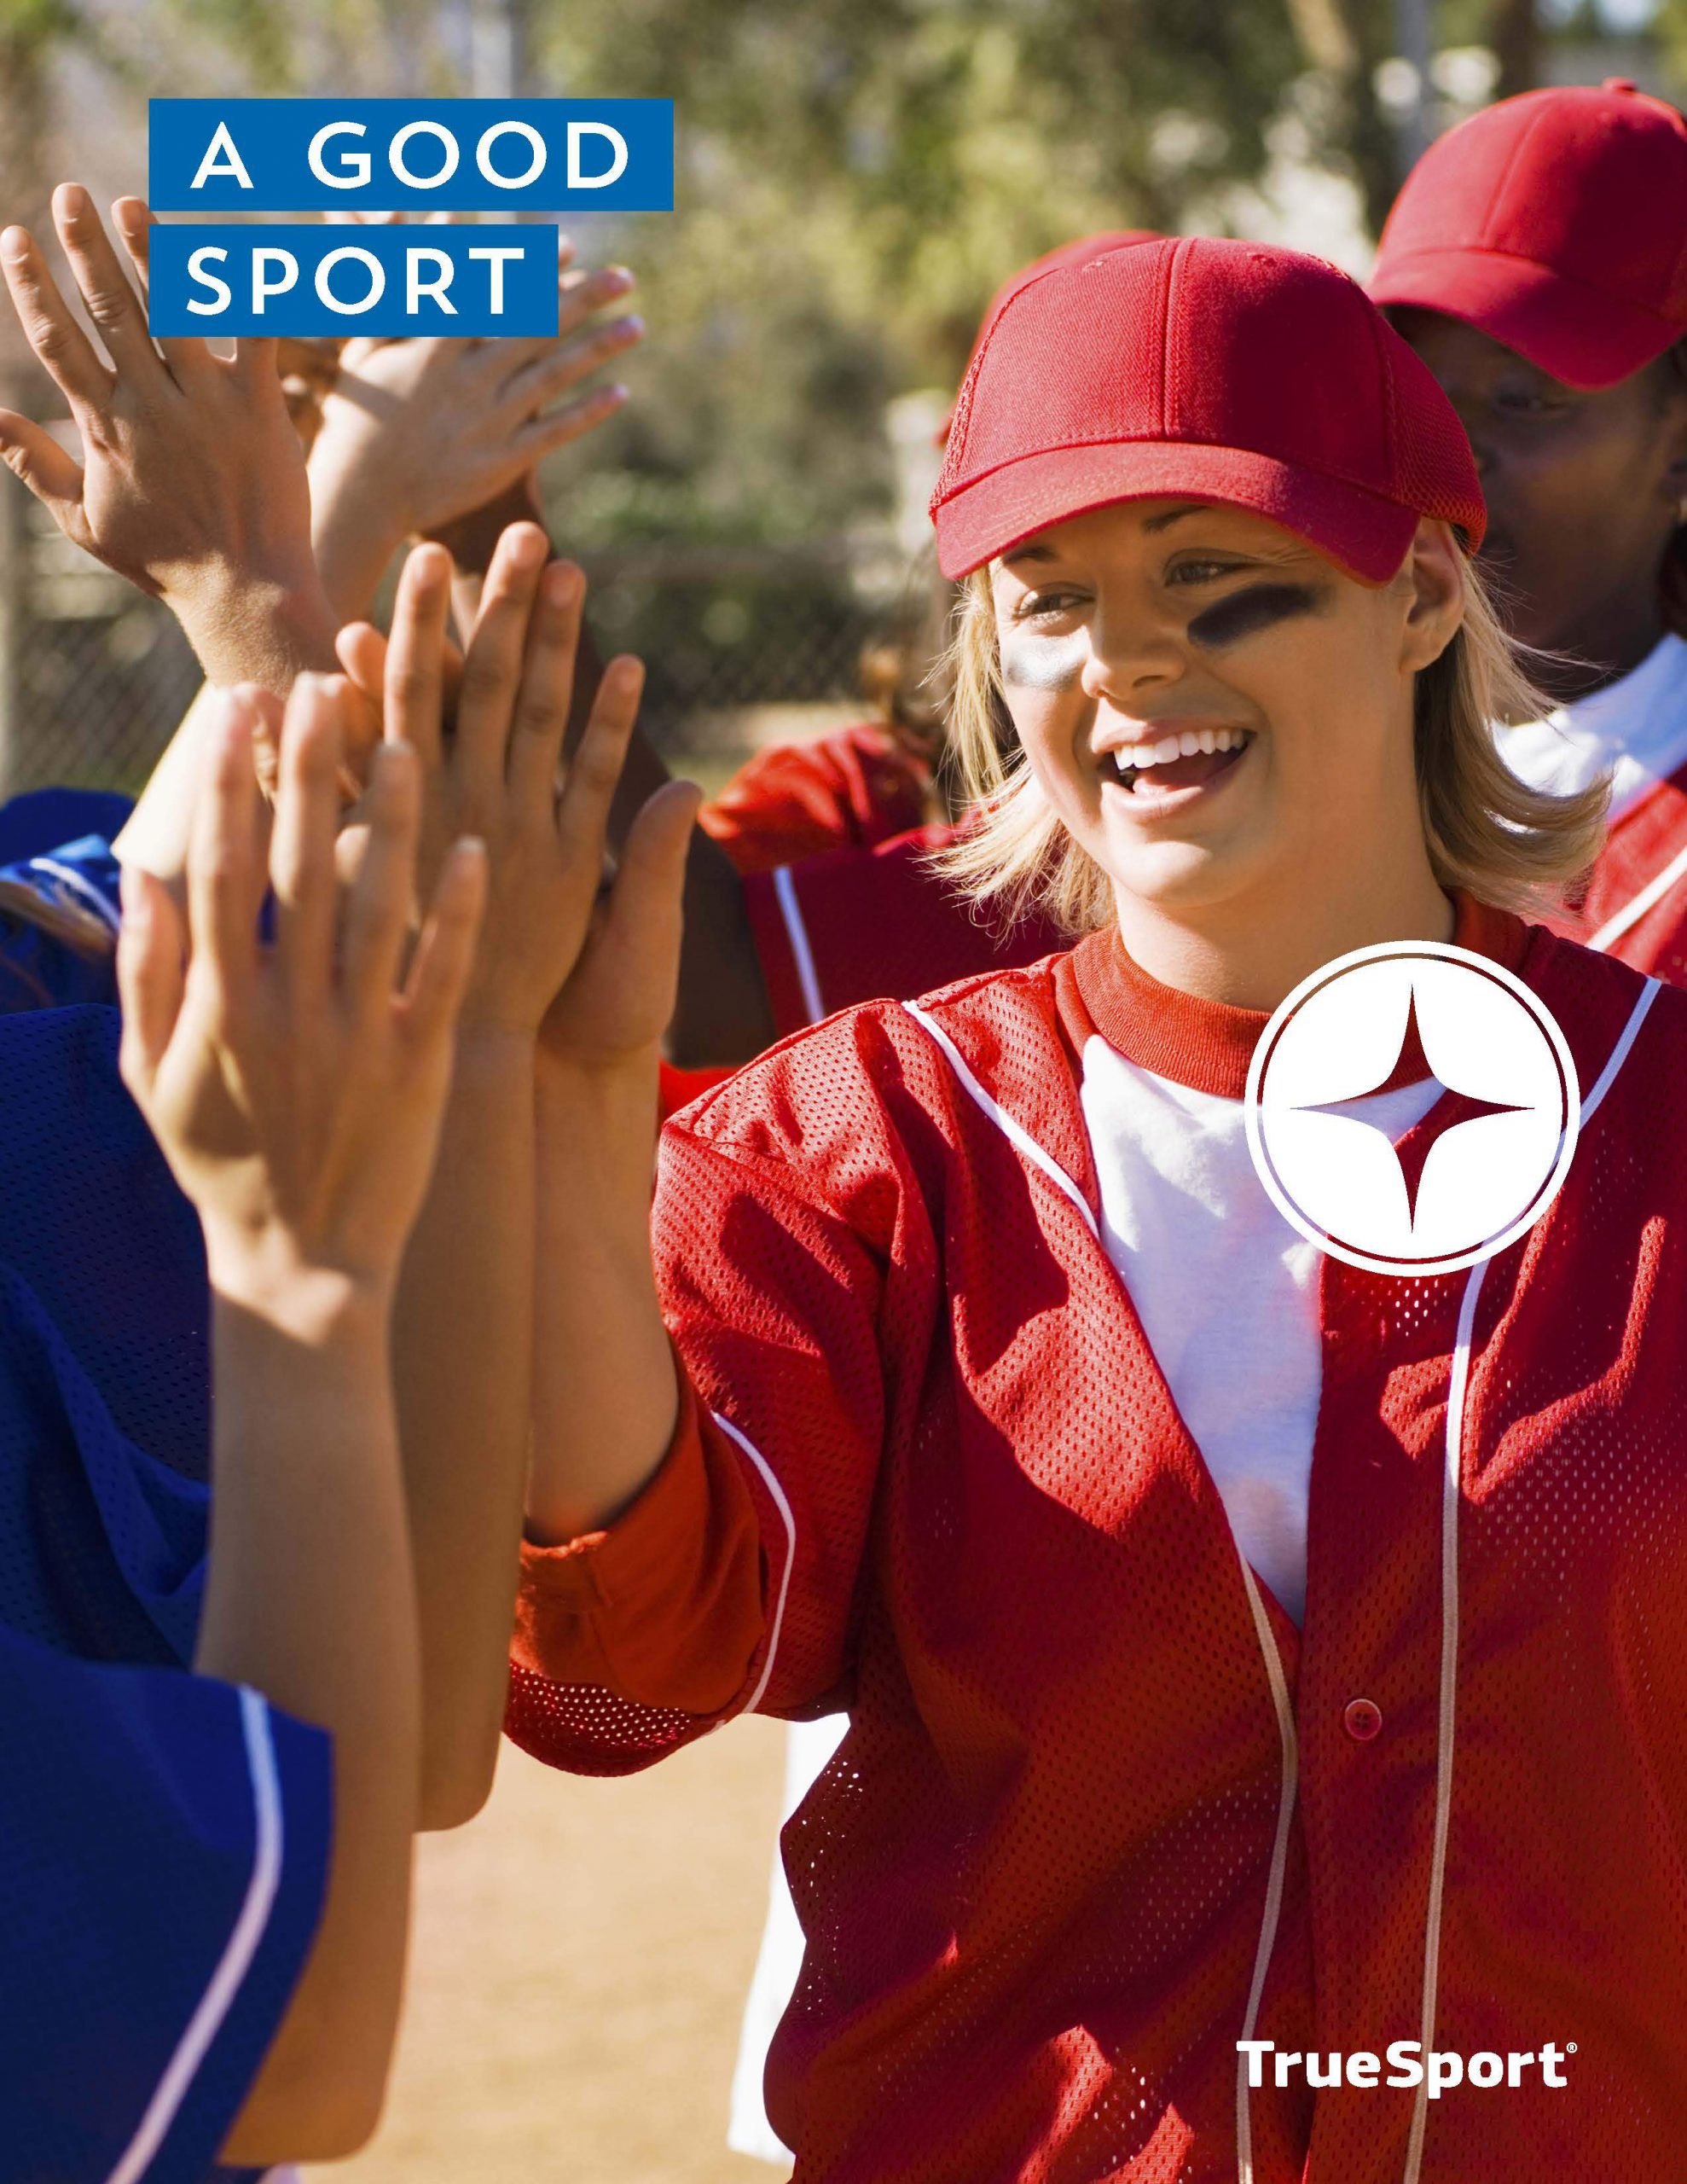 TrueSport a good sport lesson cover image.